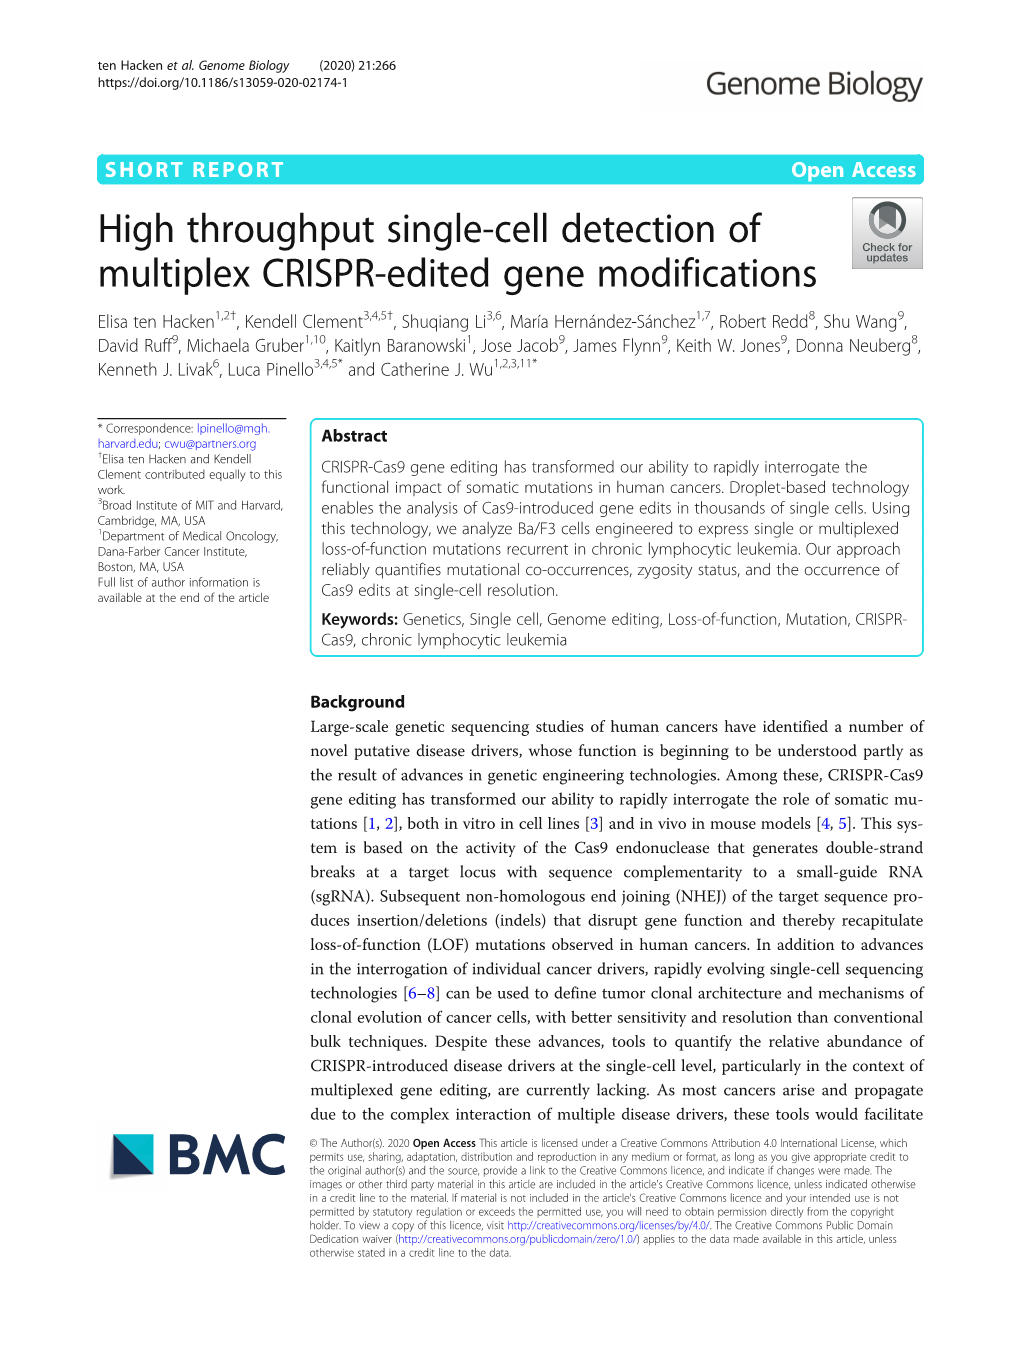 High Throughput Single-Cell Detection of Multiplex CRISPR-Edited Gene